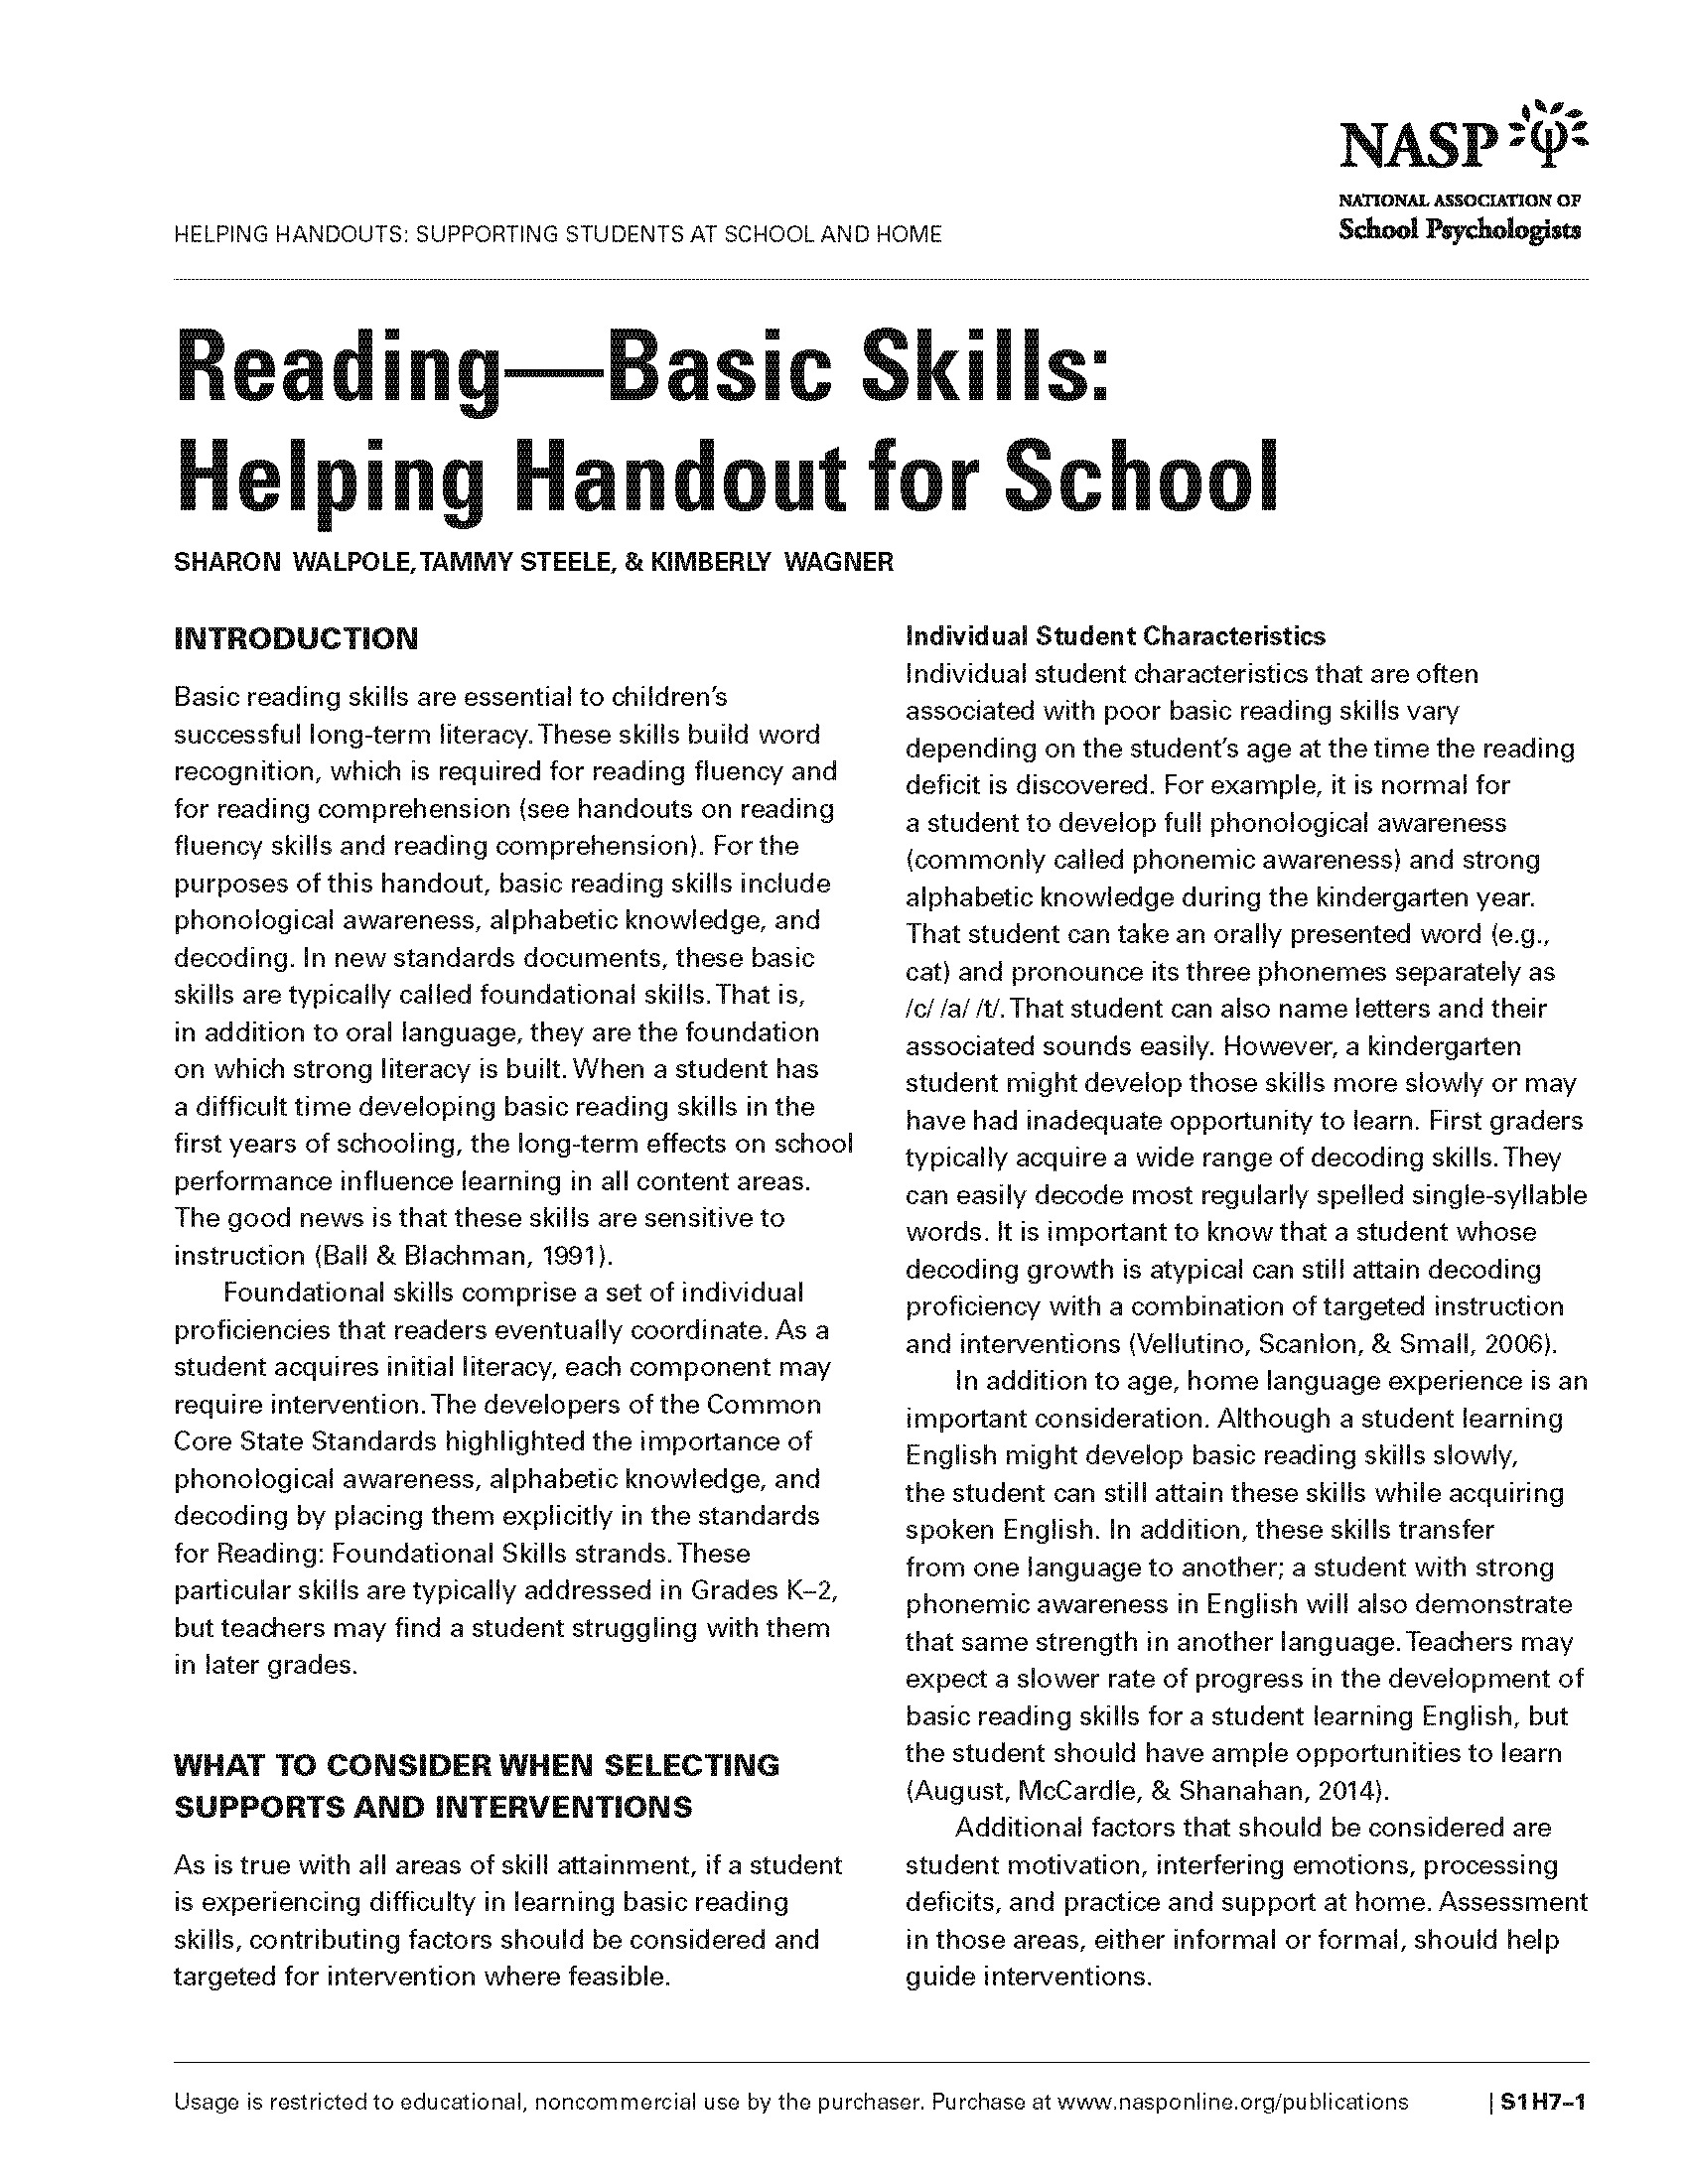 Reading—Basic Skills: Helping Handout for School